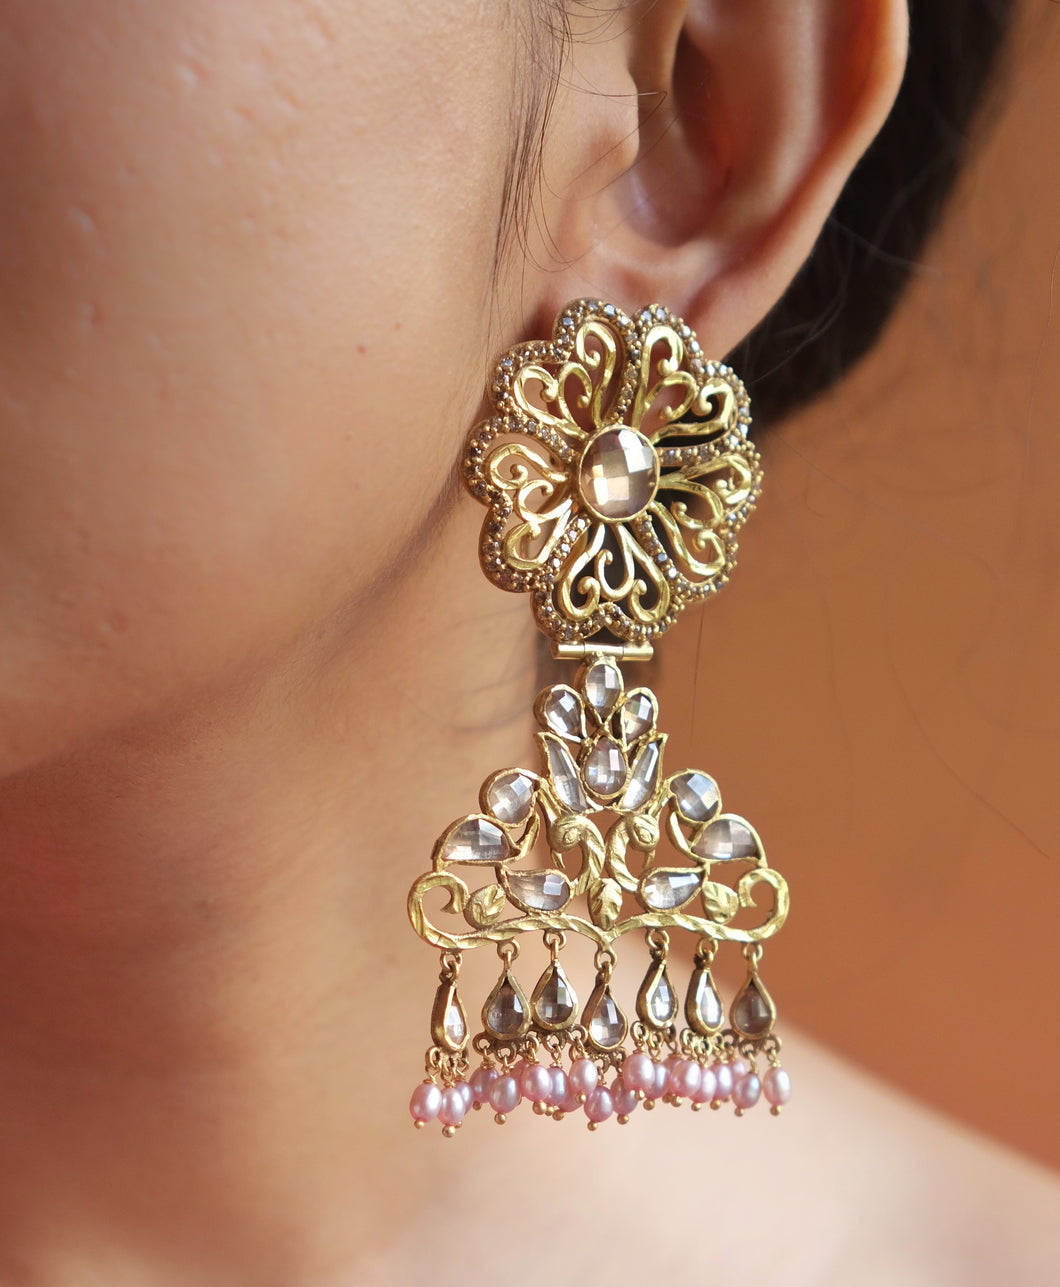 Maharani earrings